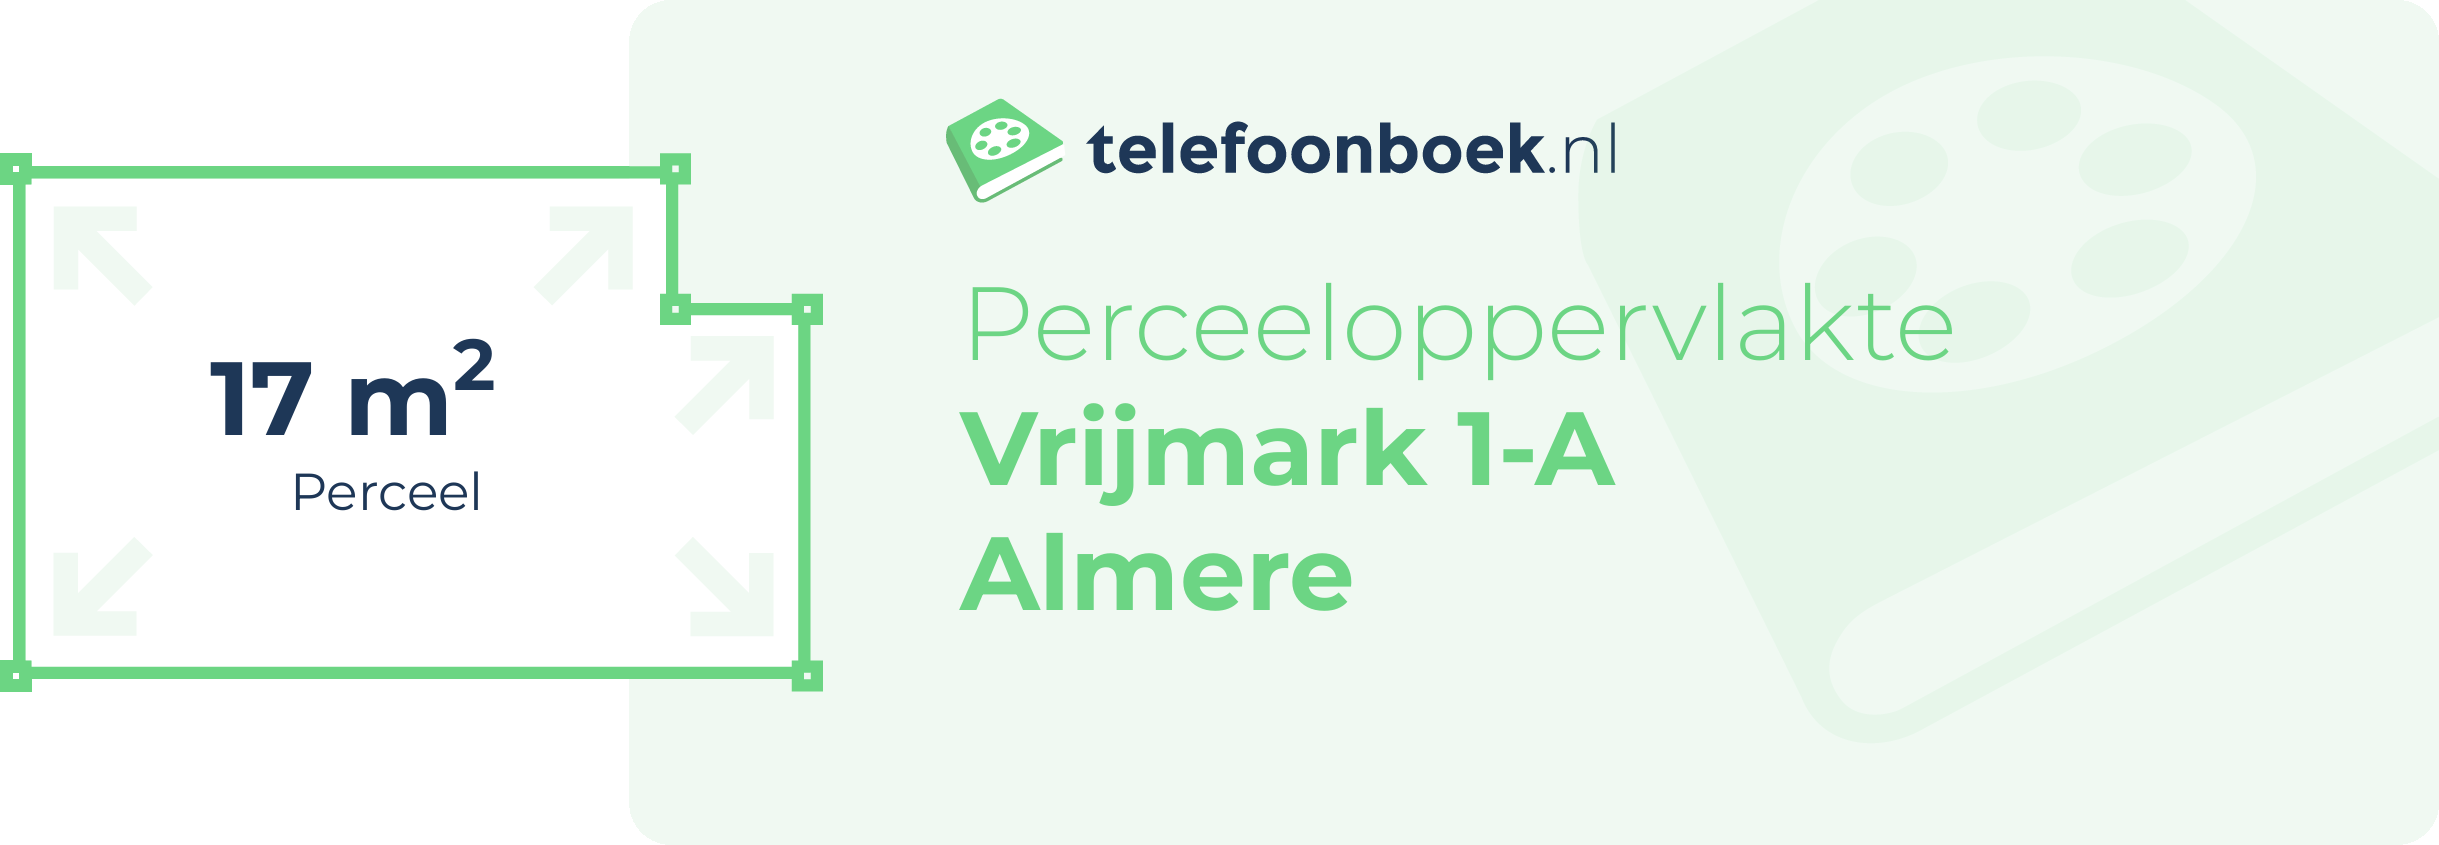 Perceeloppervlakte Vrijmark 1-A Almere